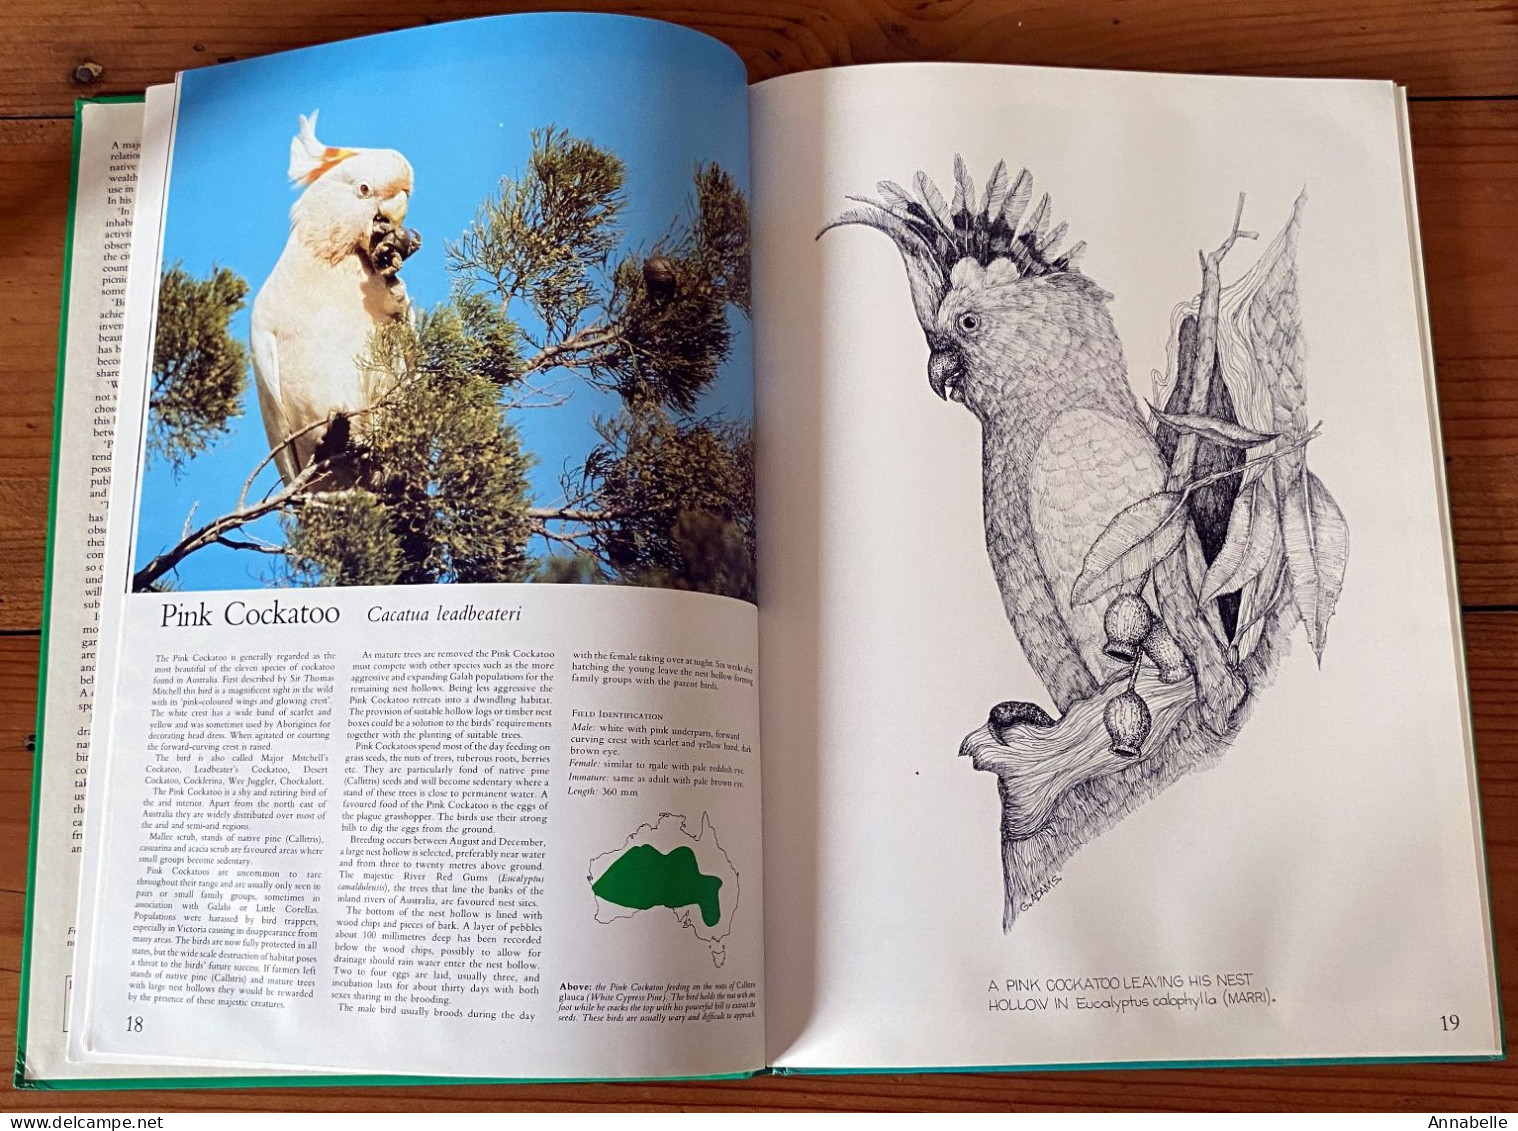 Foliage Birds : Australian Birds And Their Favoured Plants Par George Martin Adams (1981) Livre En Anglais - Animali